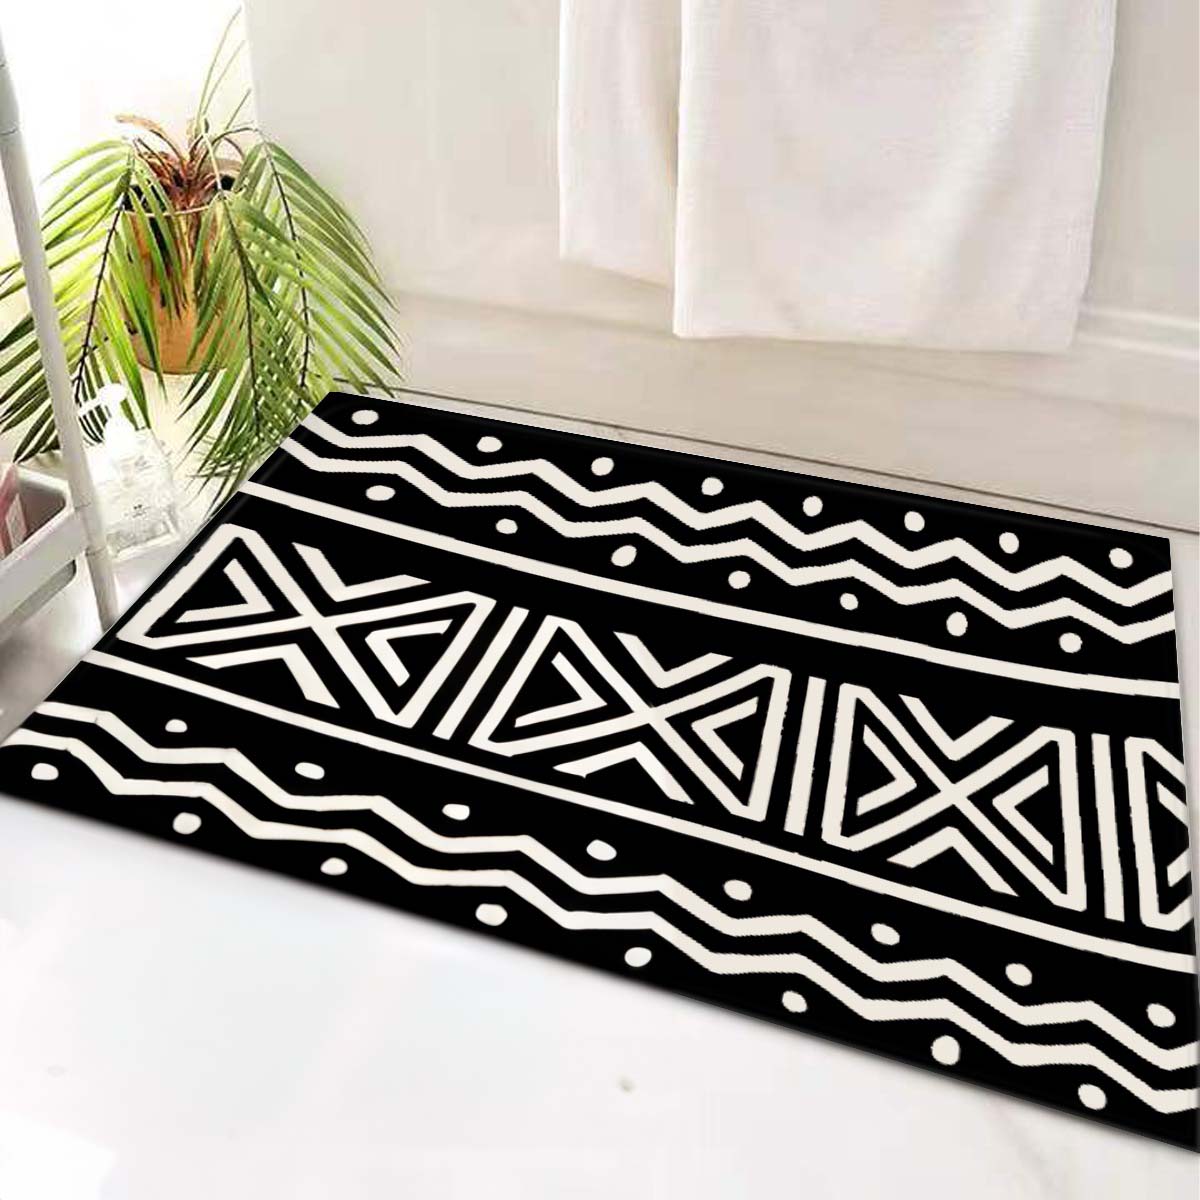 Black and White African Bathroom Rug Mudcloth Print